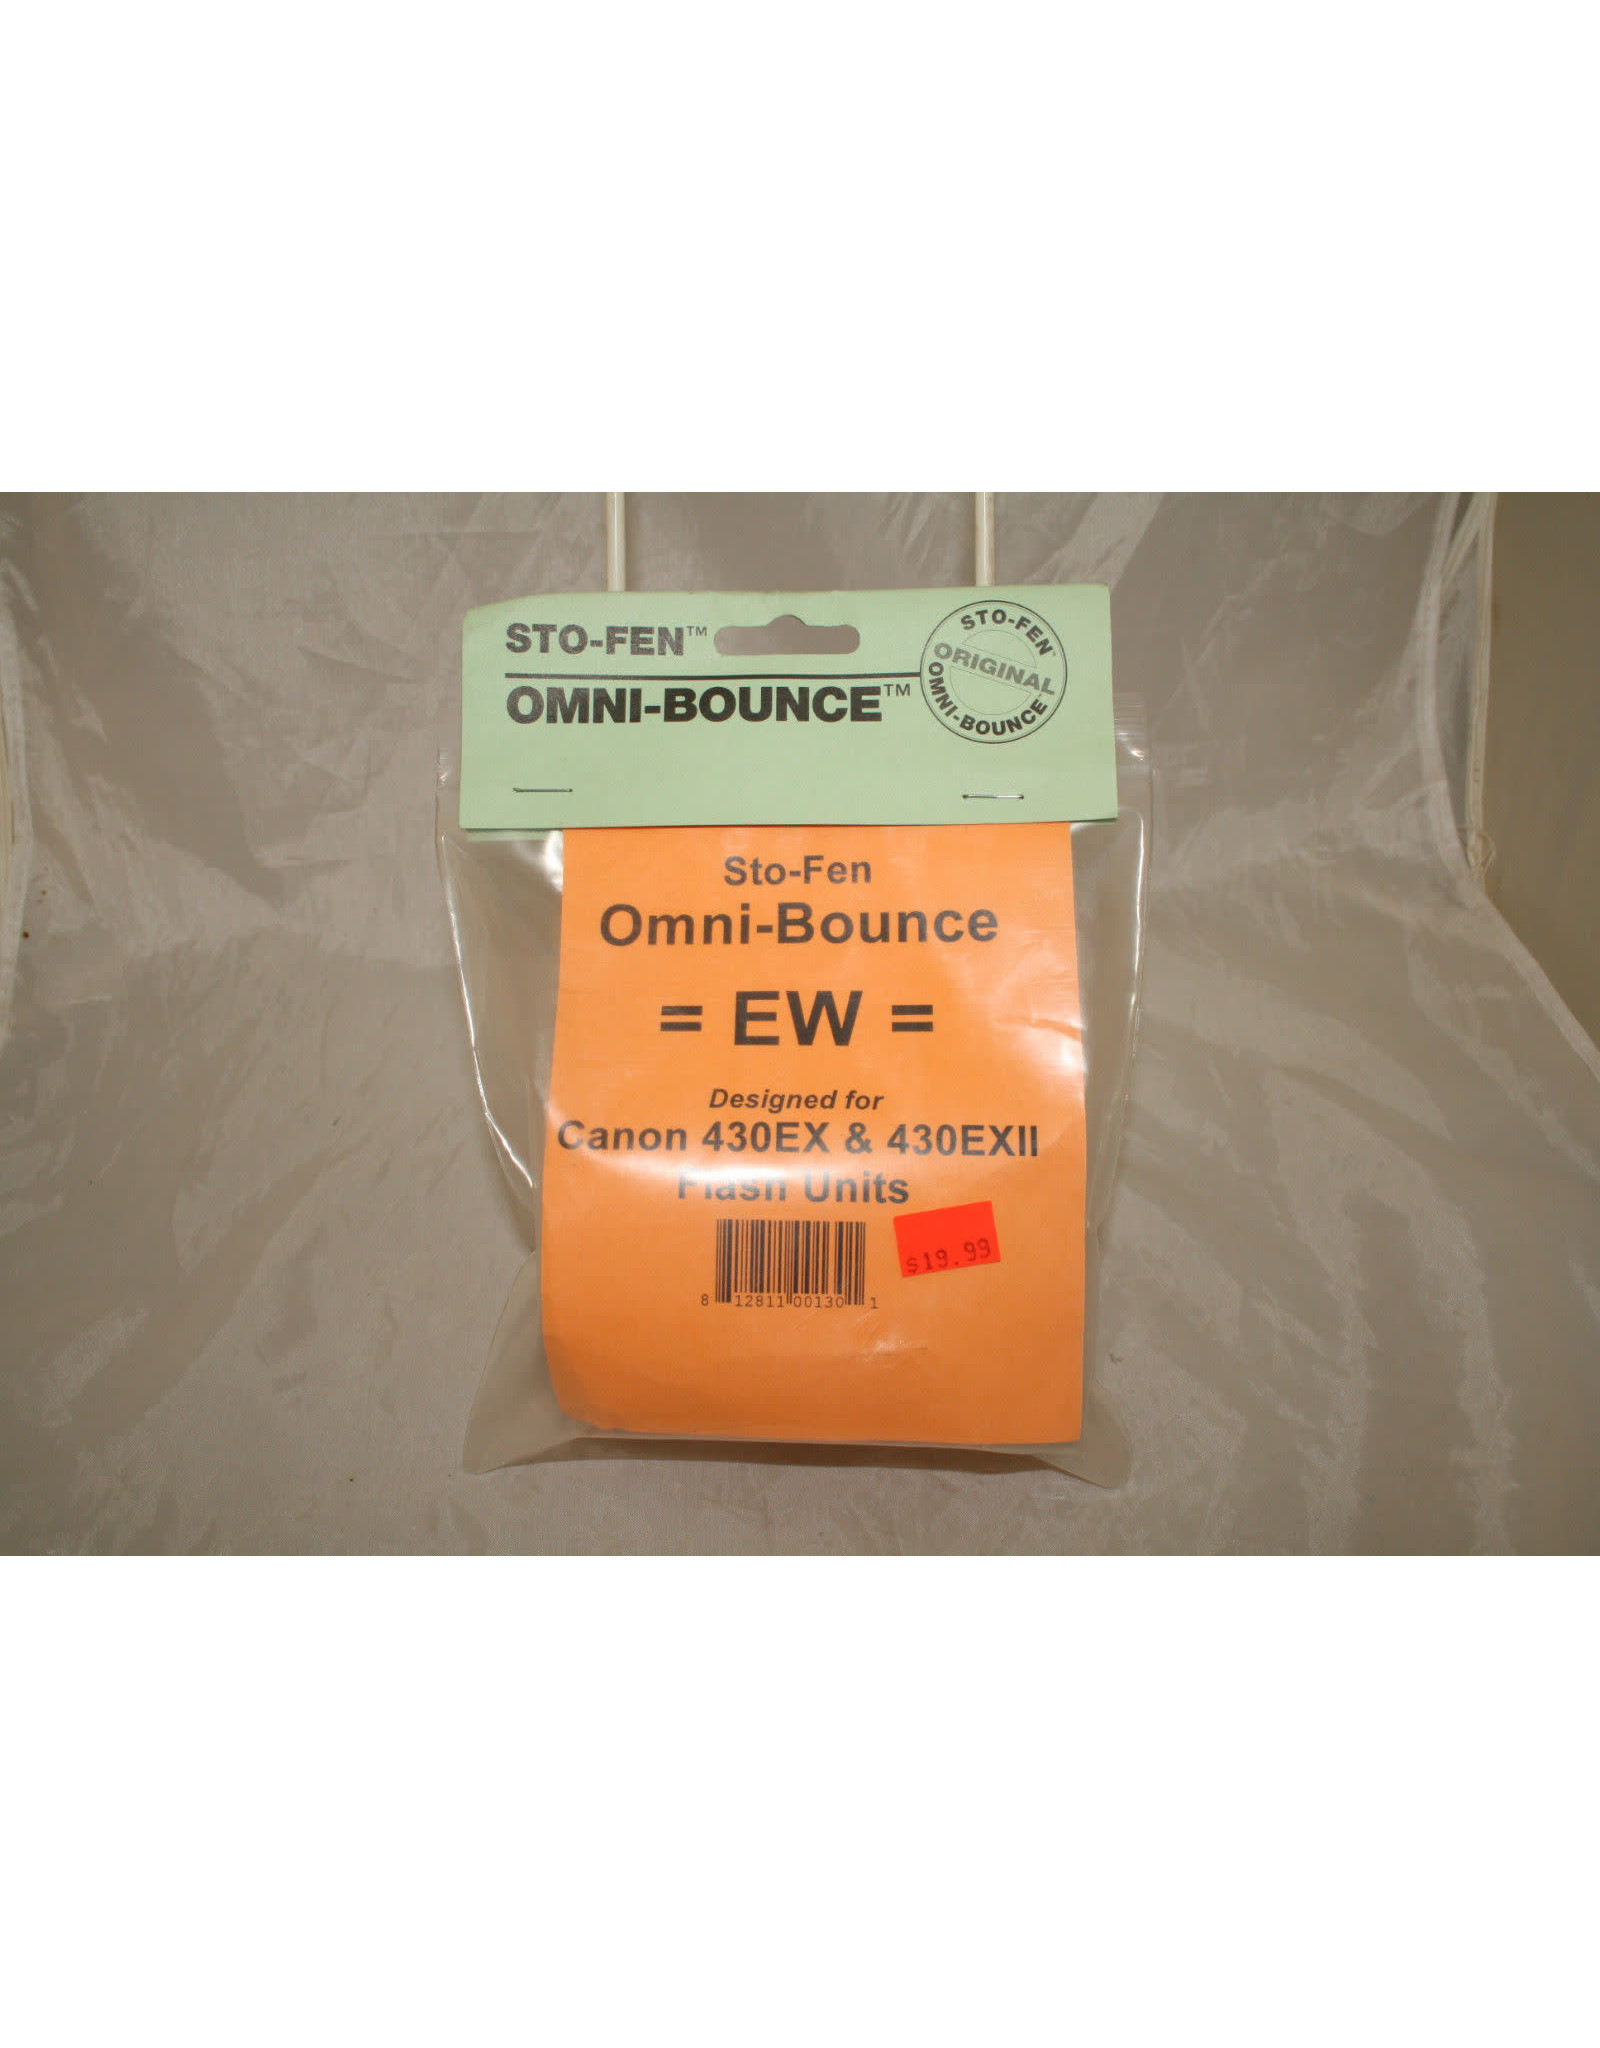 Sto-fen Omni-bounce EW for canon 430EX & 430EXII flash units